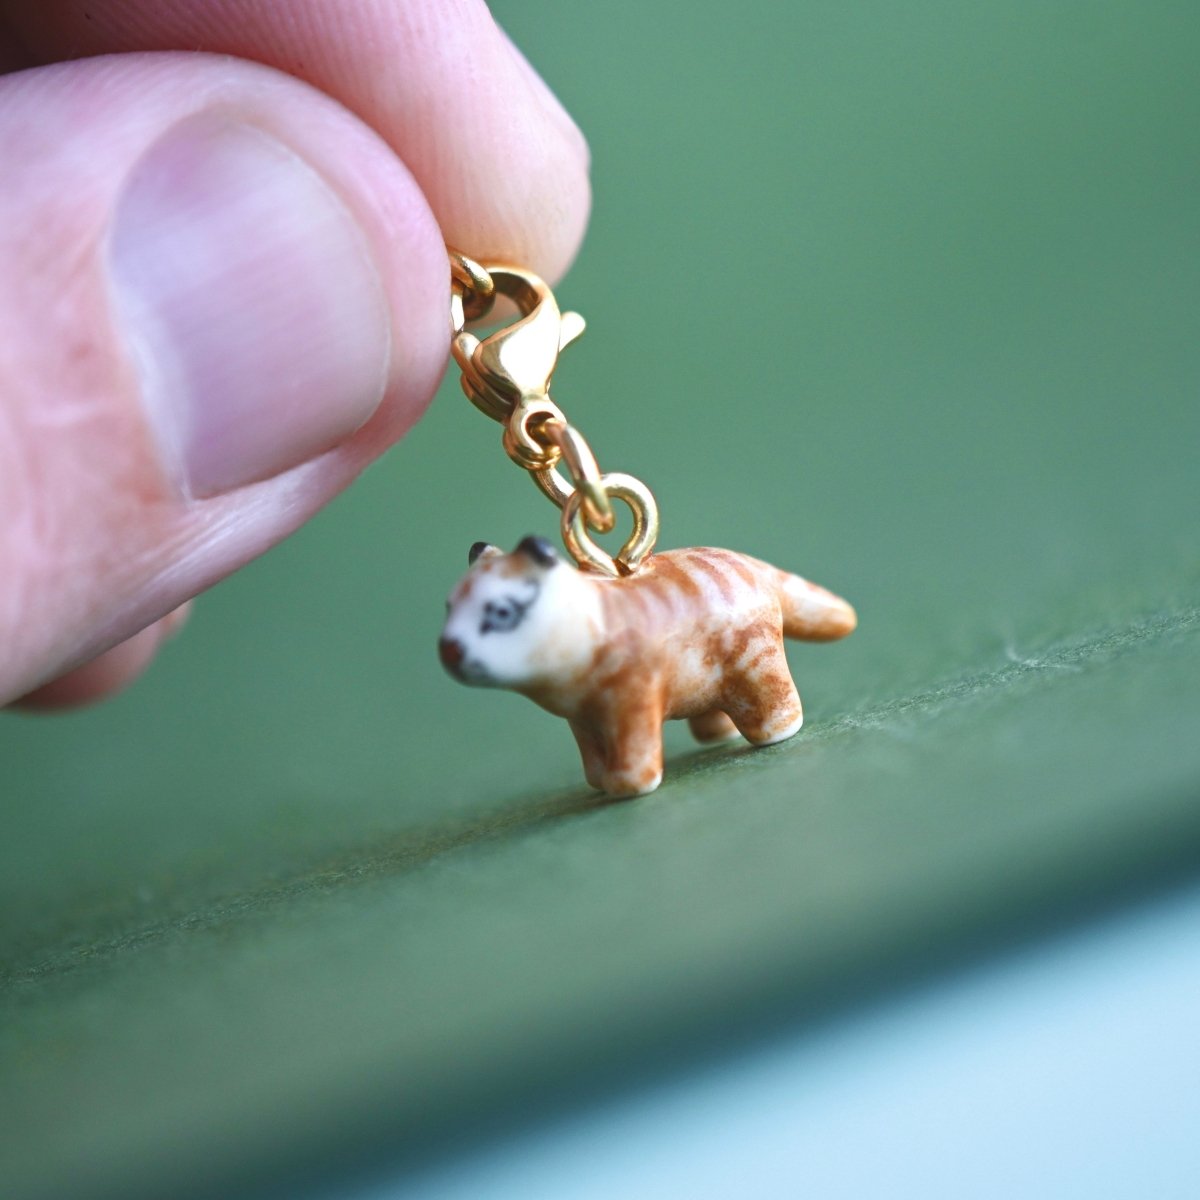 Unicorn Charm Bracelet - Animal Lover Bracelet